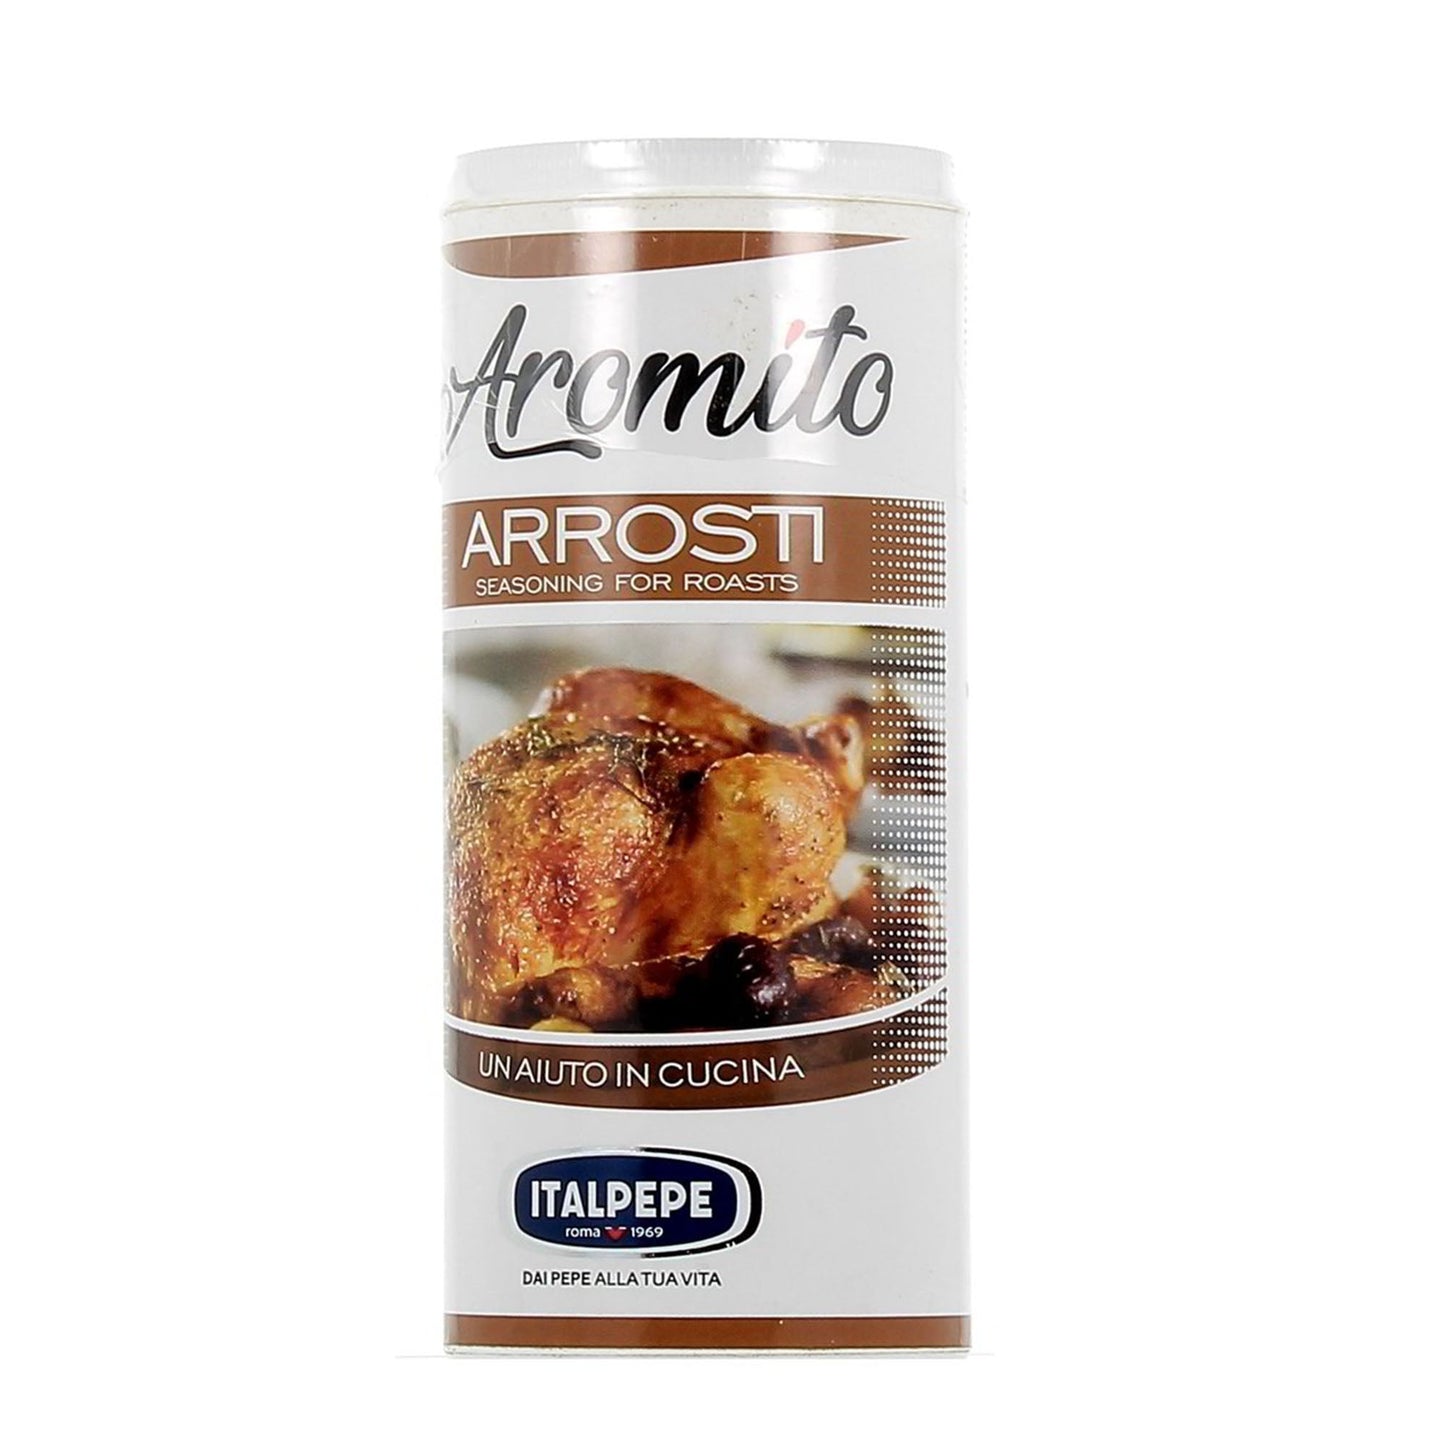 Aromito Arrosti Seasoning 130G